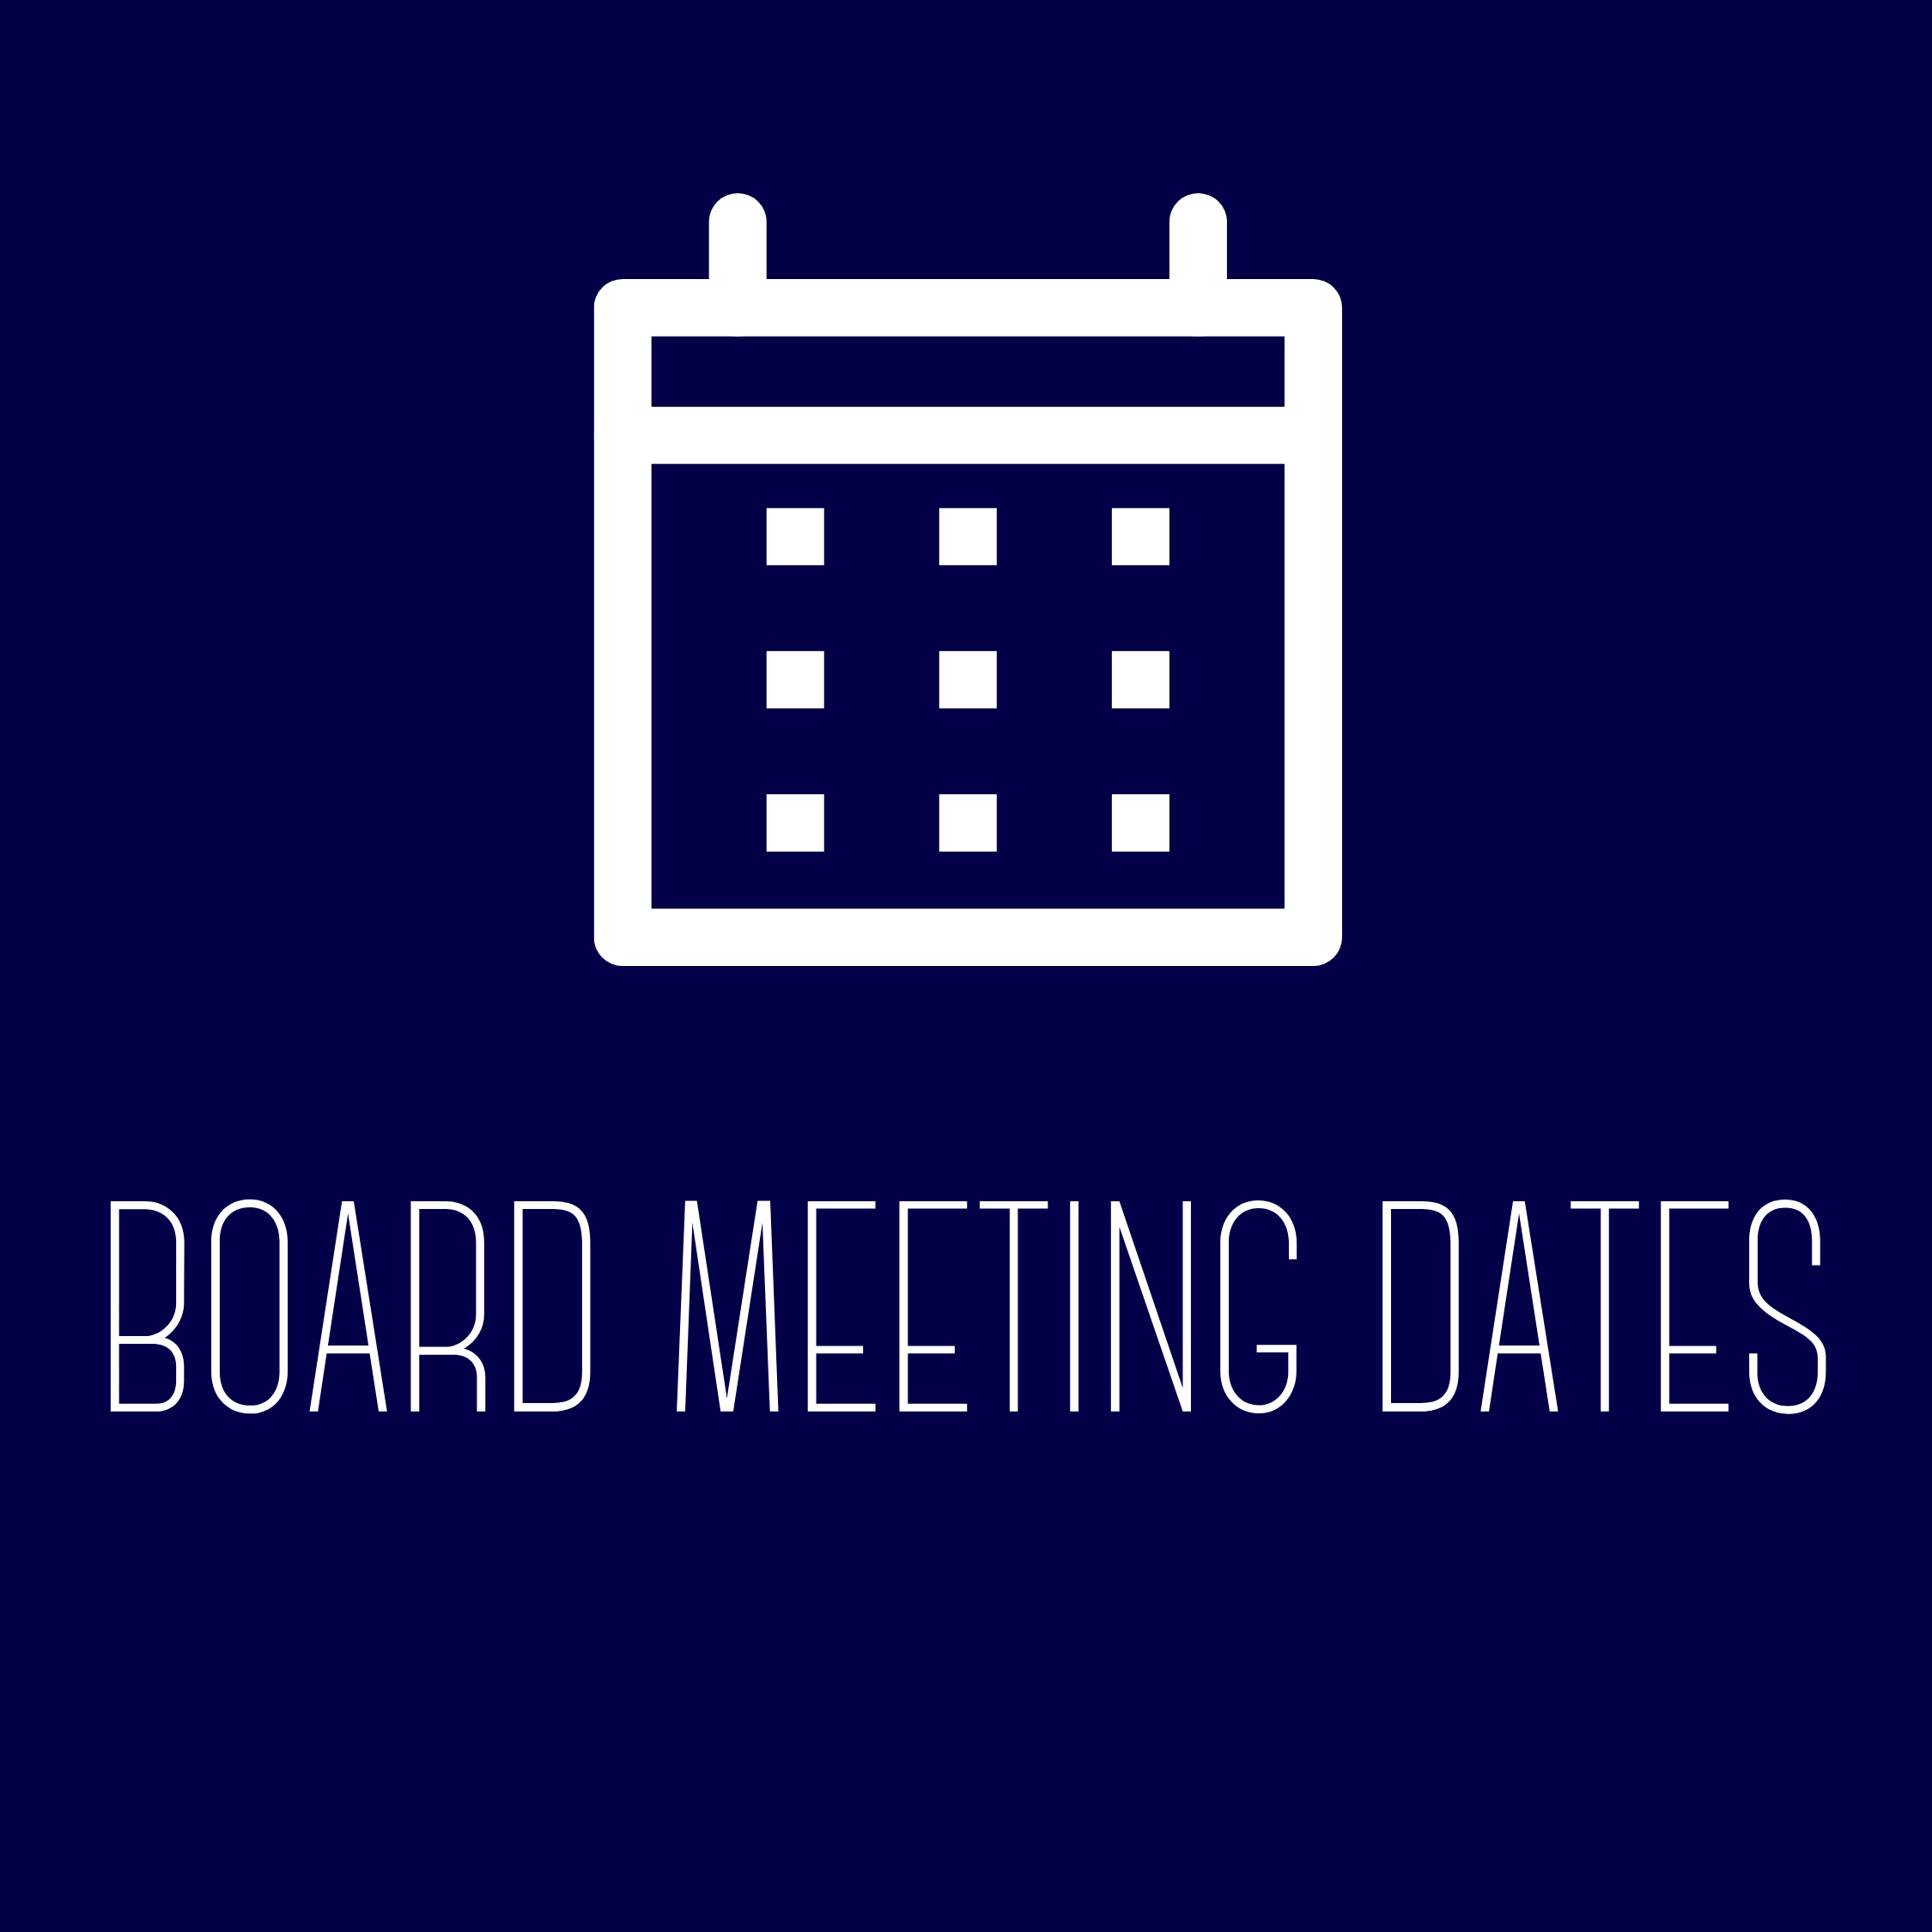 Board Meeting Dates